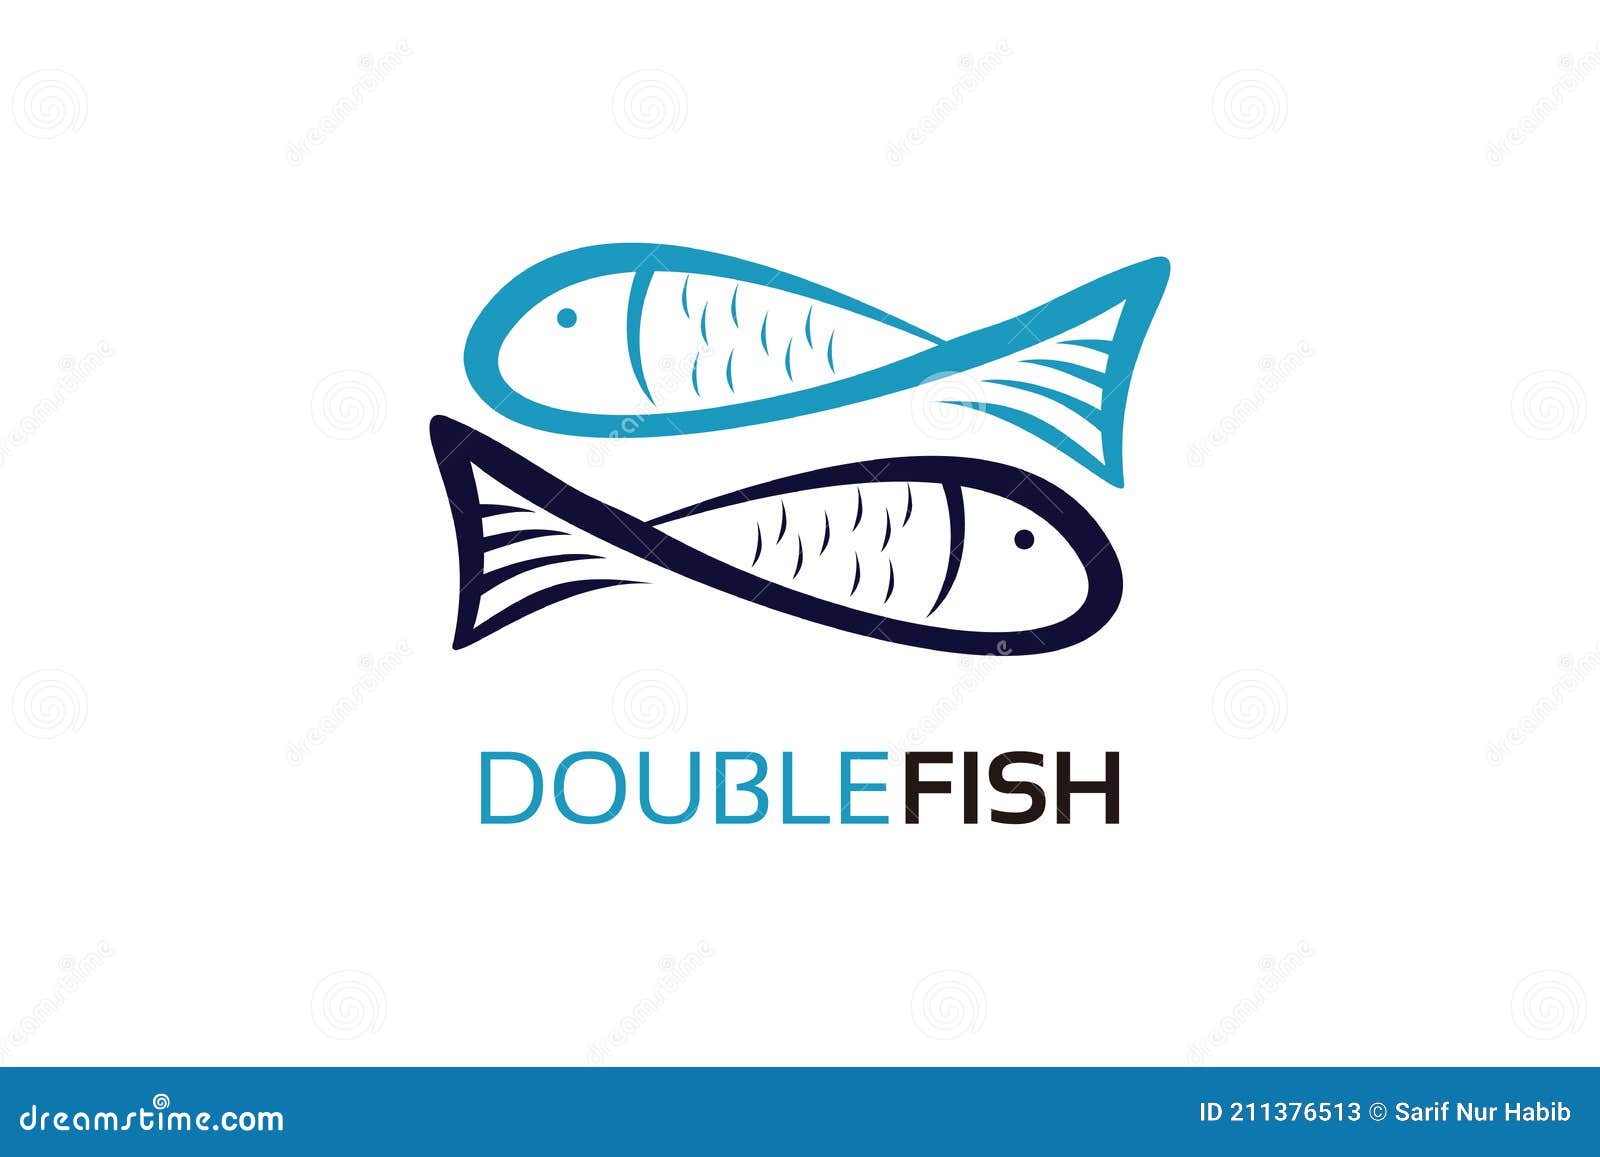 Double Fish Logo Design Template Stock Vector - Illustration of line,  company: 211376513